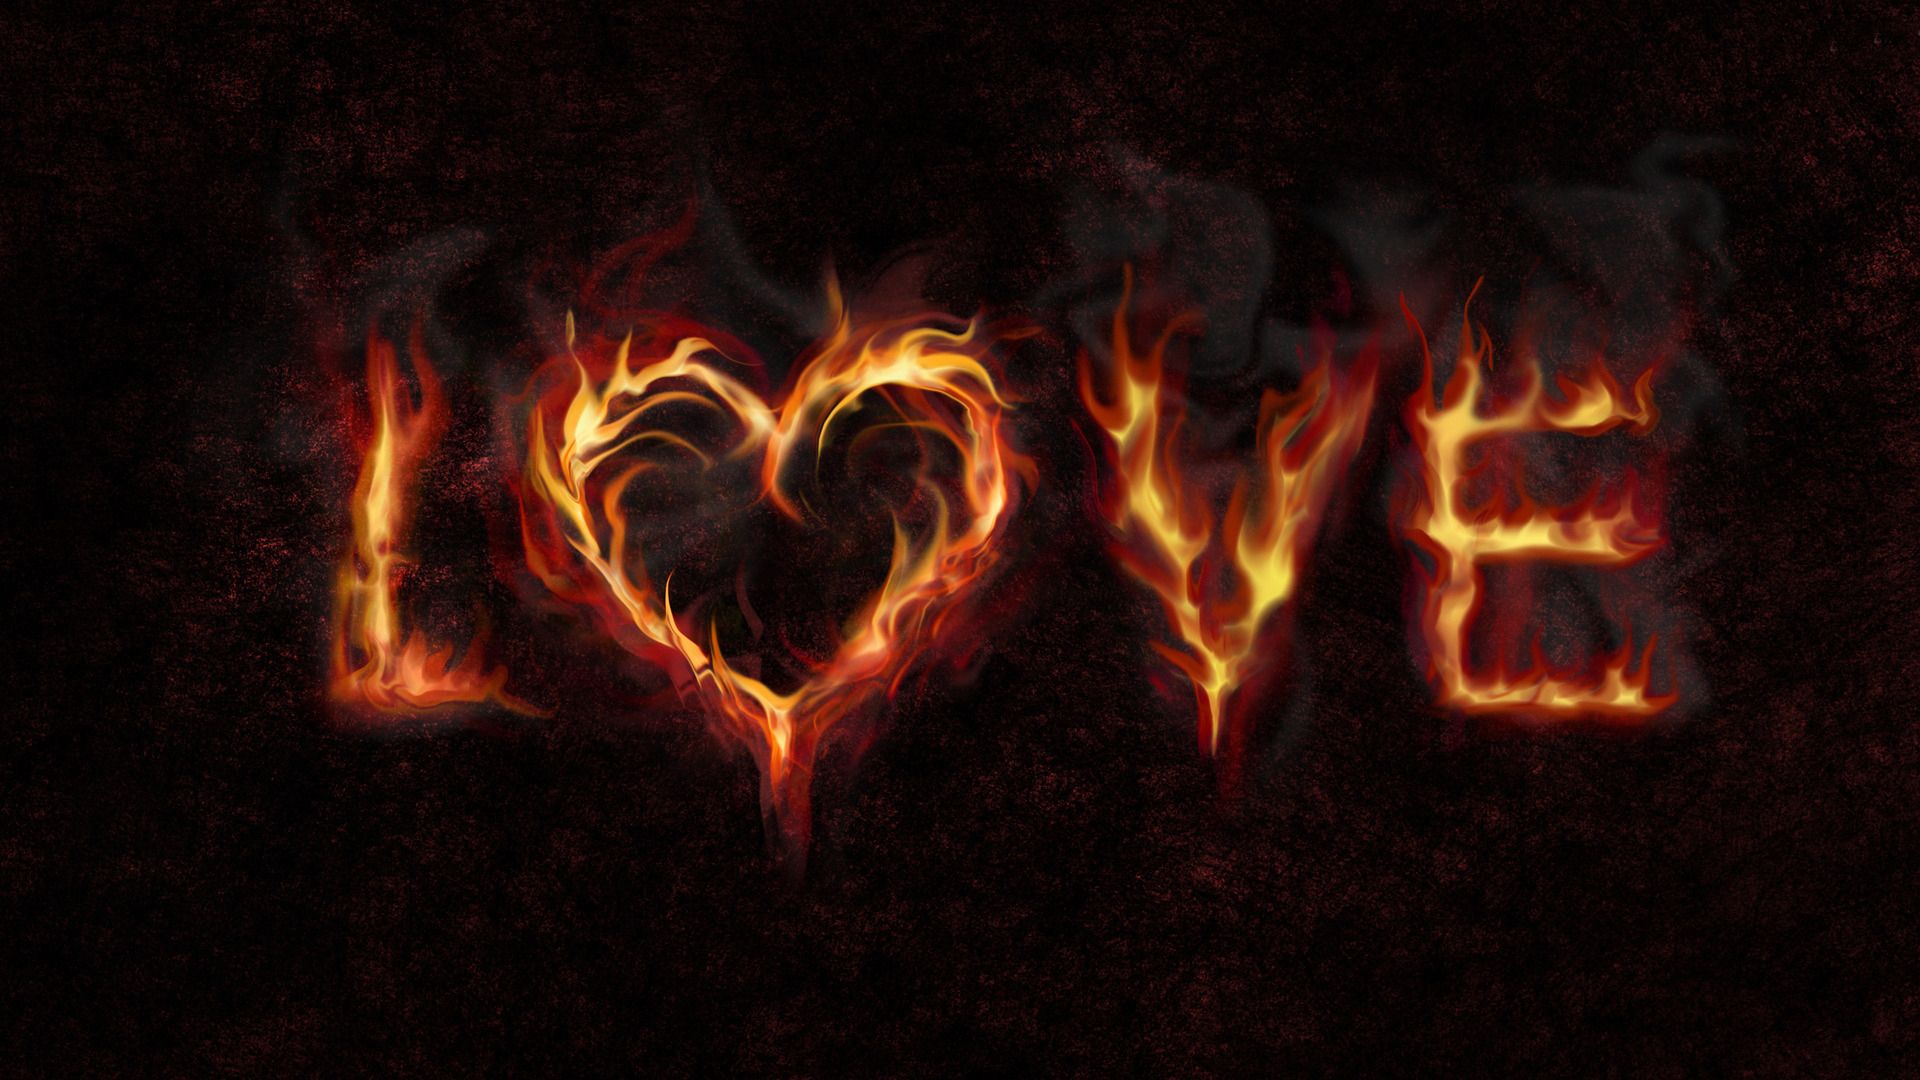 1920x1080 Fire Heart Wallpaper - Love Heart On Fire - 1920x1080 Wallpaper.....